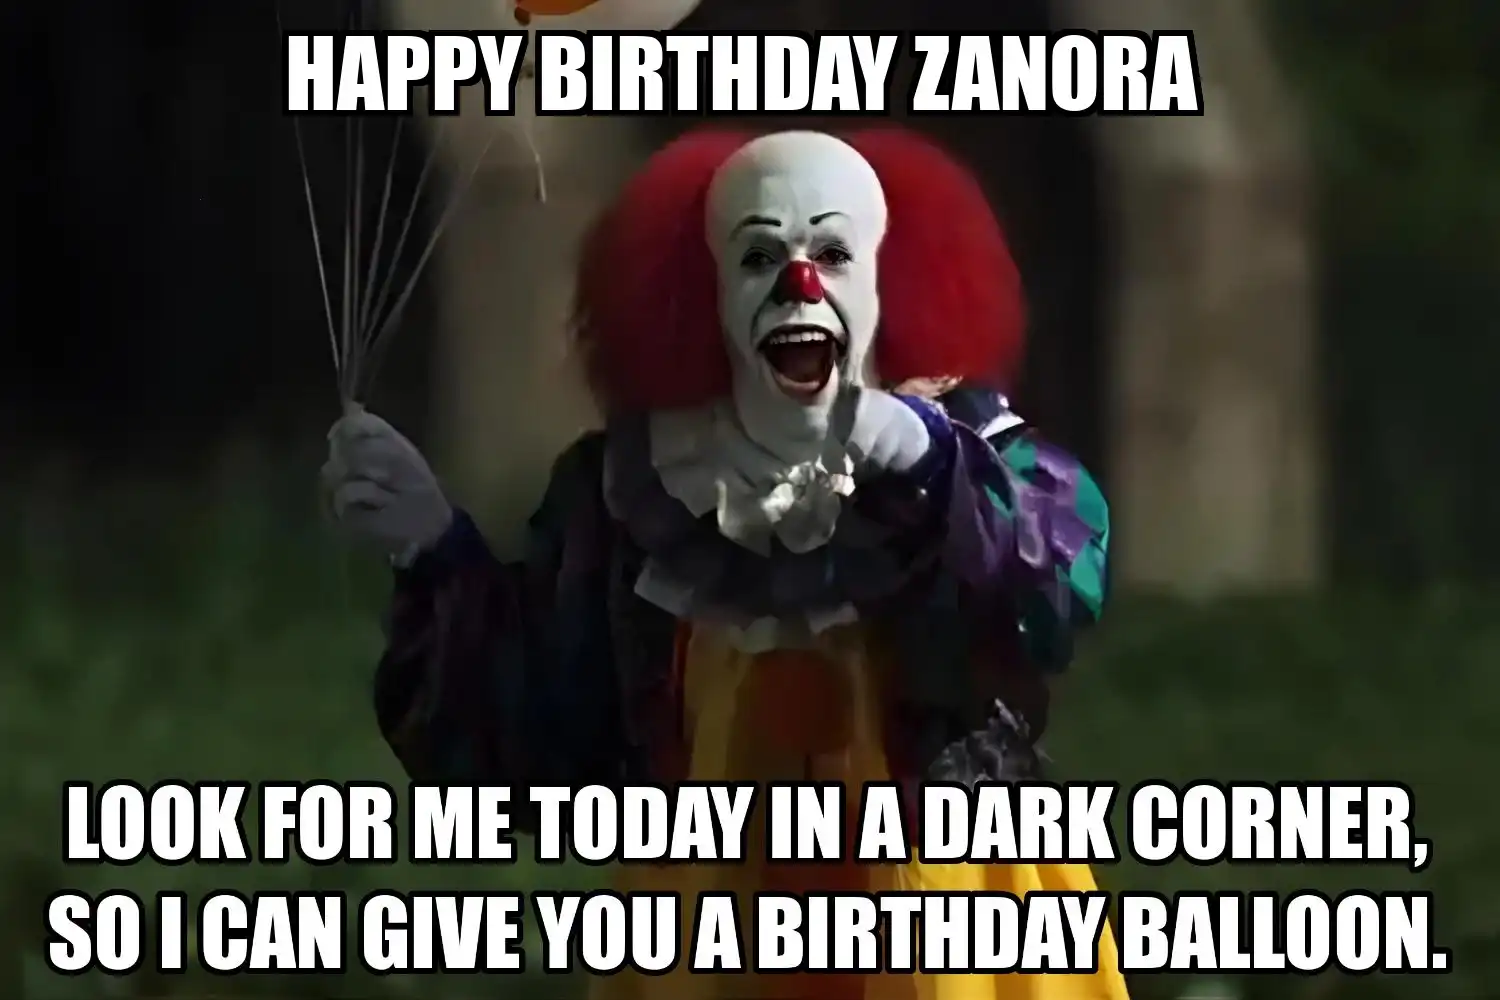 Happy Birthday Zanora I Can Give You A Balloon Meme